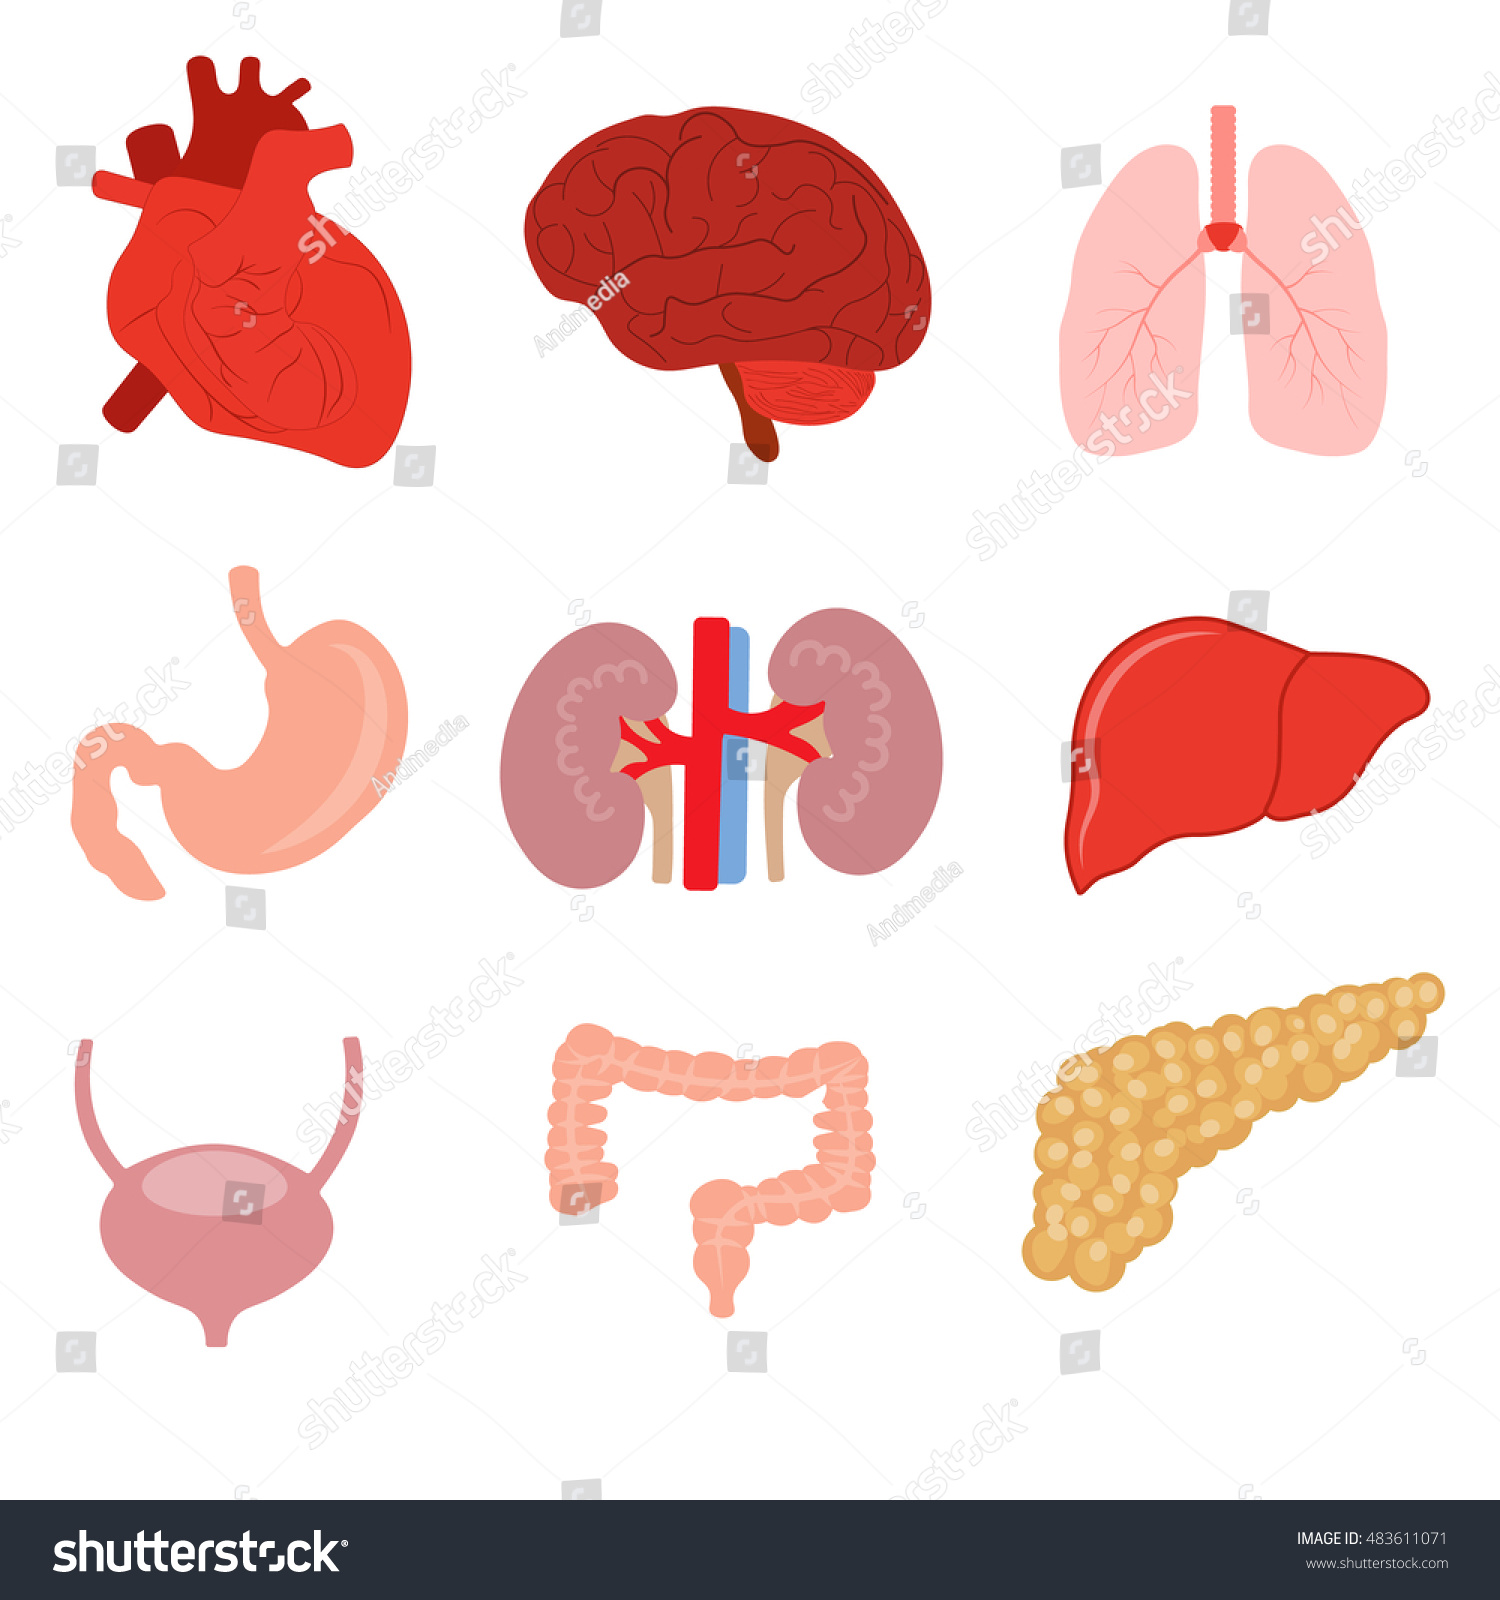 Human Organ Anatomy Set Stock Vector Illustration 483611071 : Shutterstock